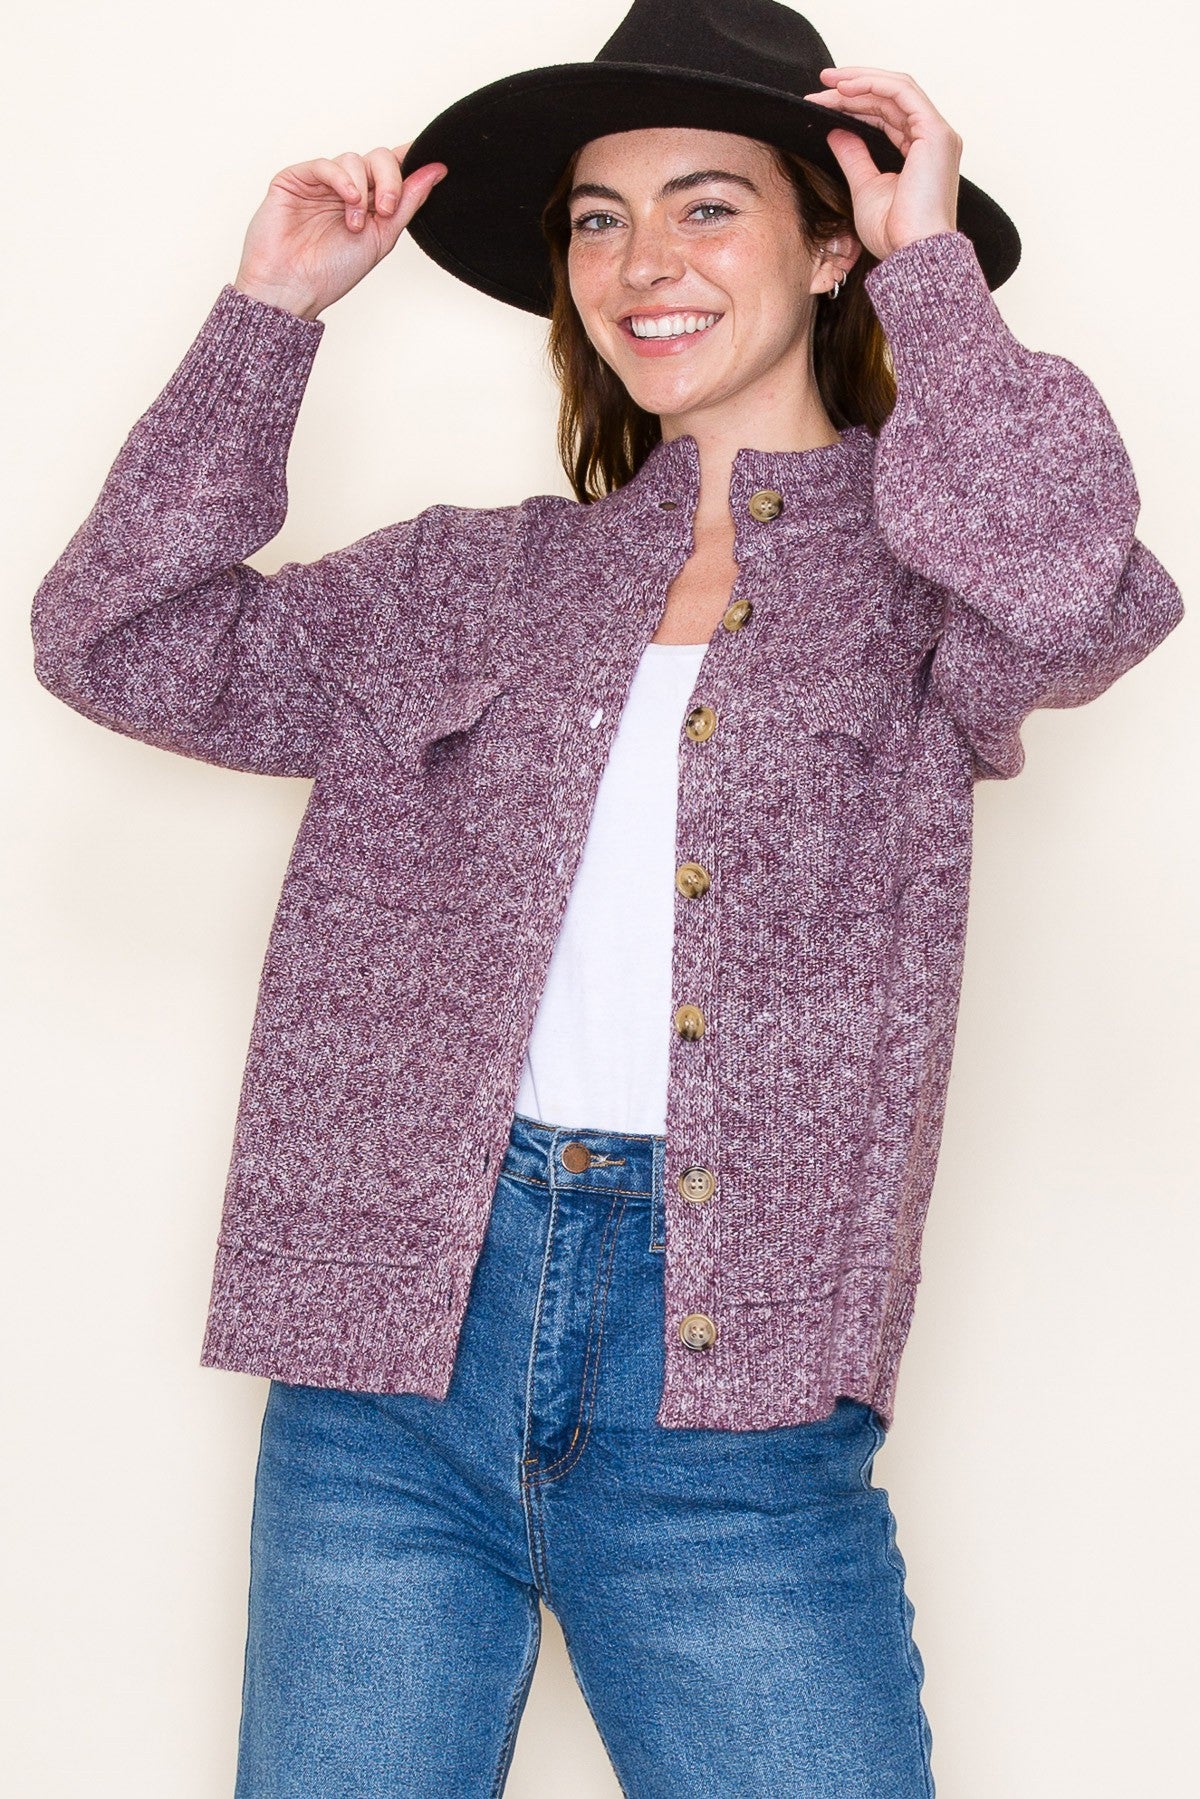 Kim Textured Chest Pocket Sweater cardigan | Two Tone Purple